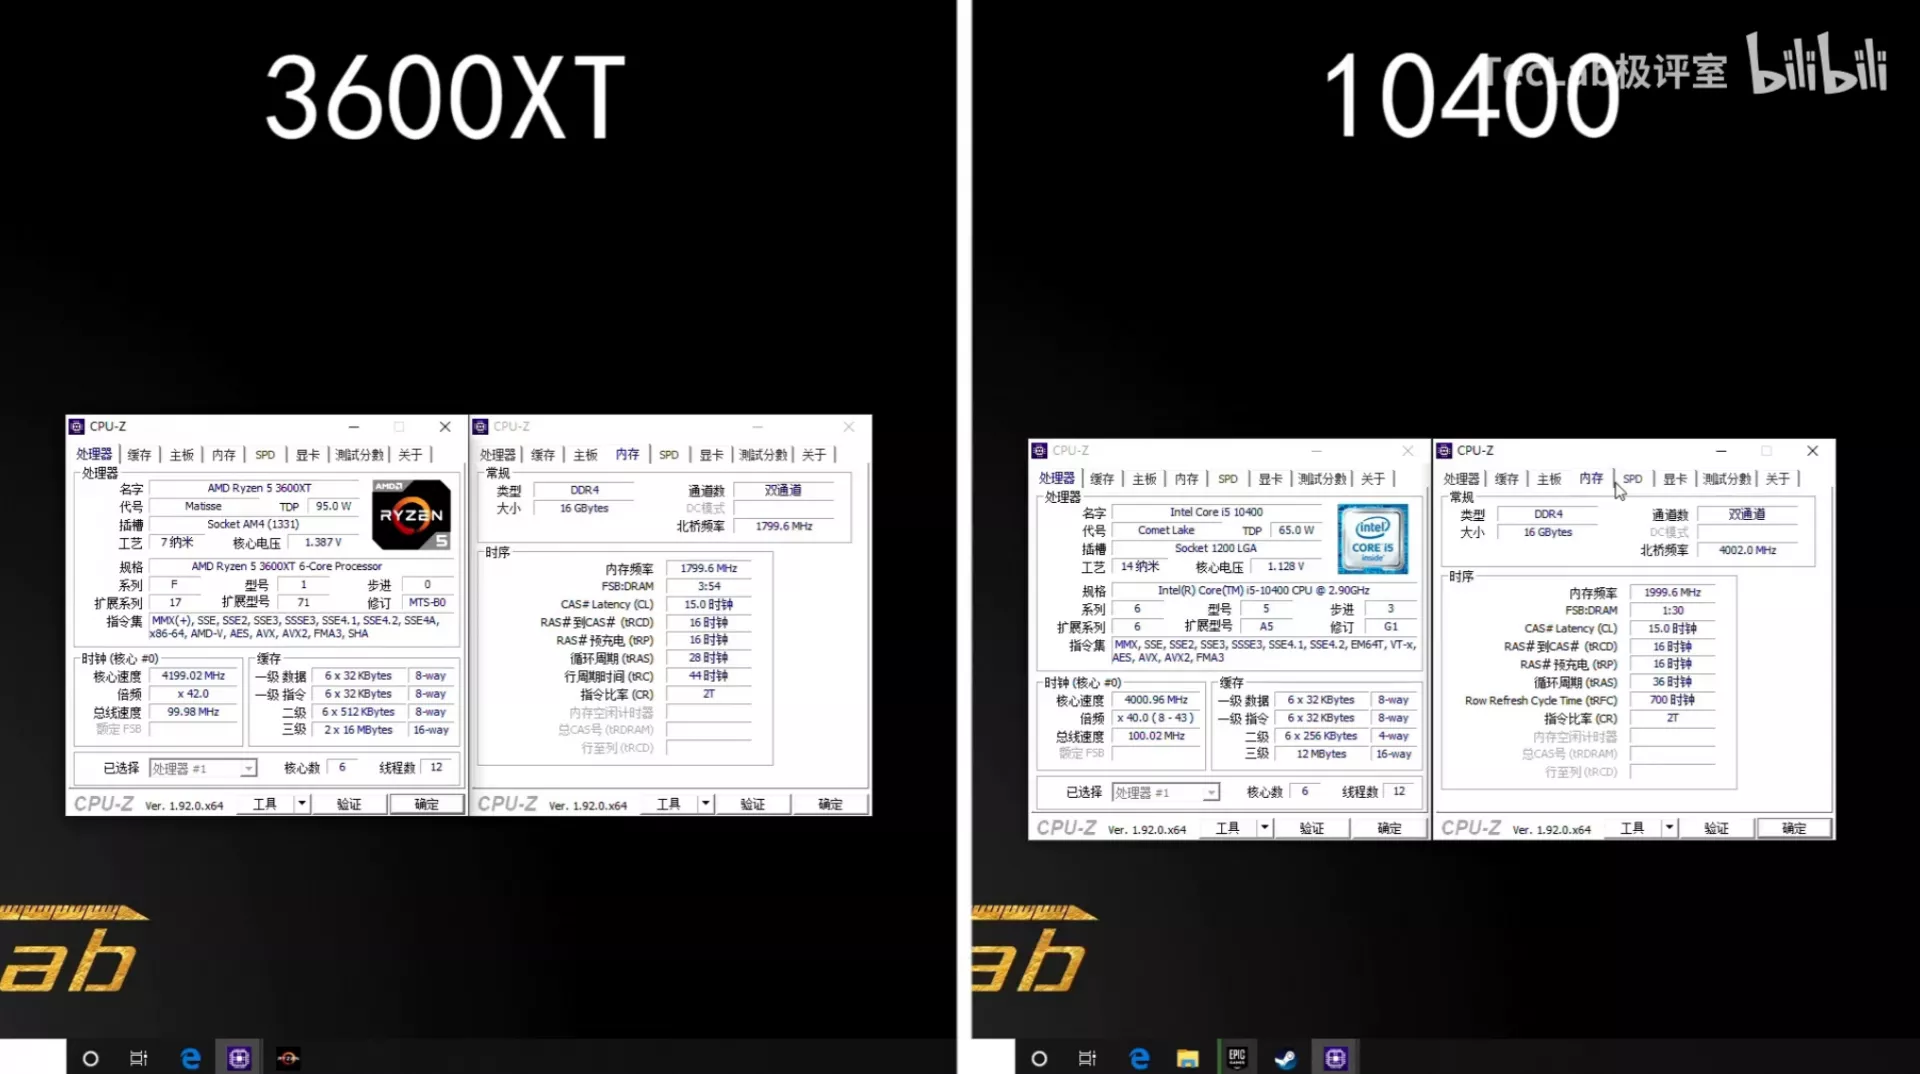 AMD Ryzen 5 3600XT сравнили с Intel Core i5-10400. Кто победил в этот раз?